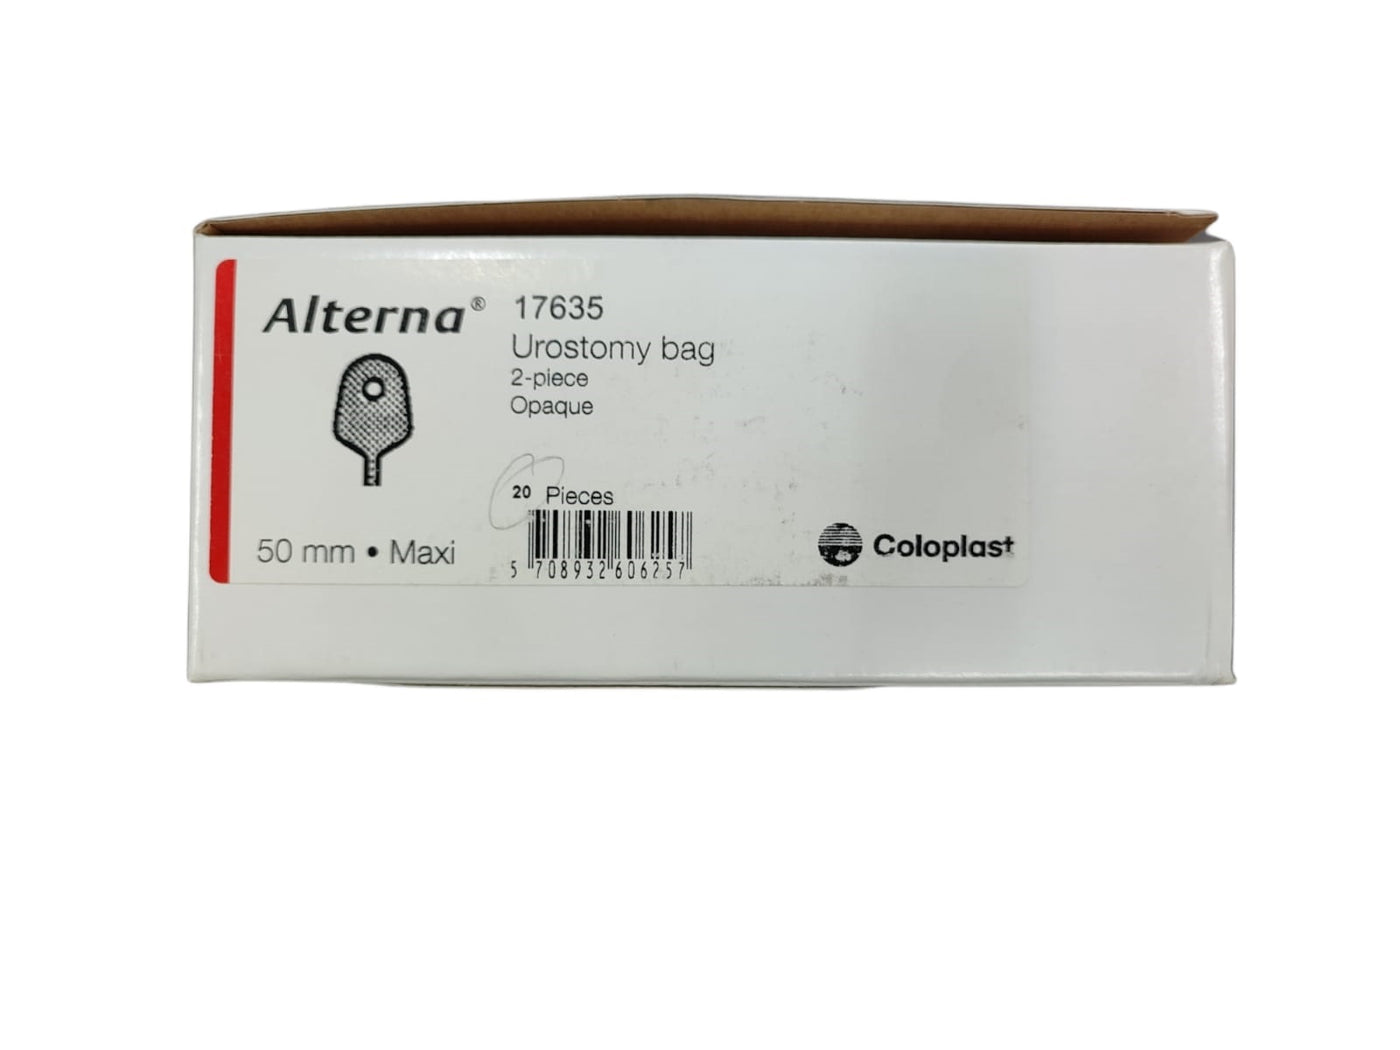 Coloplast 50 mm Opaque Urostomy Bag 1755 / 17635 (New Code)